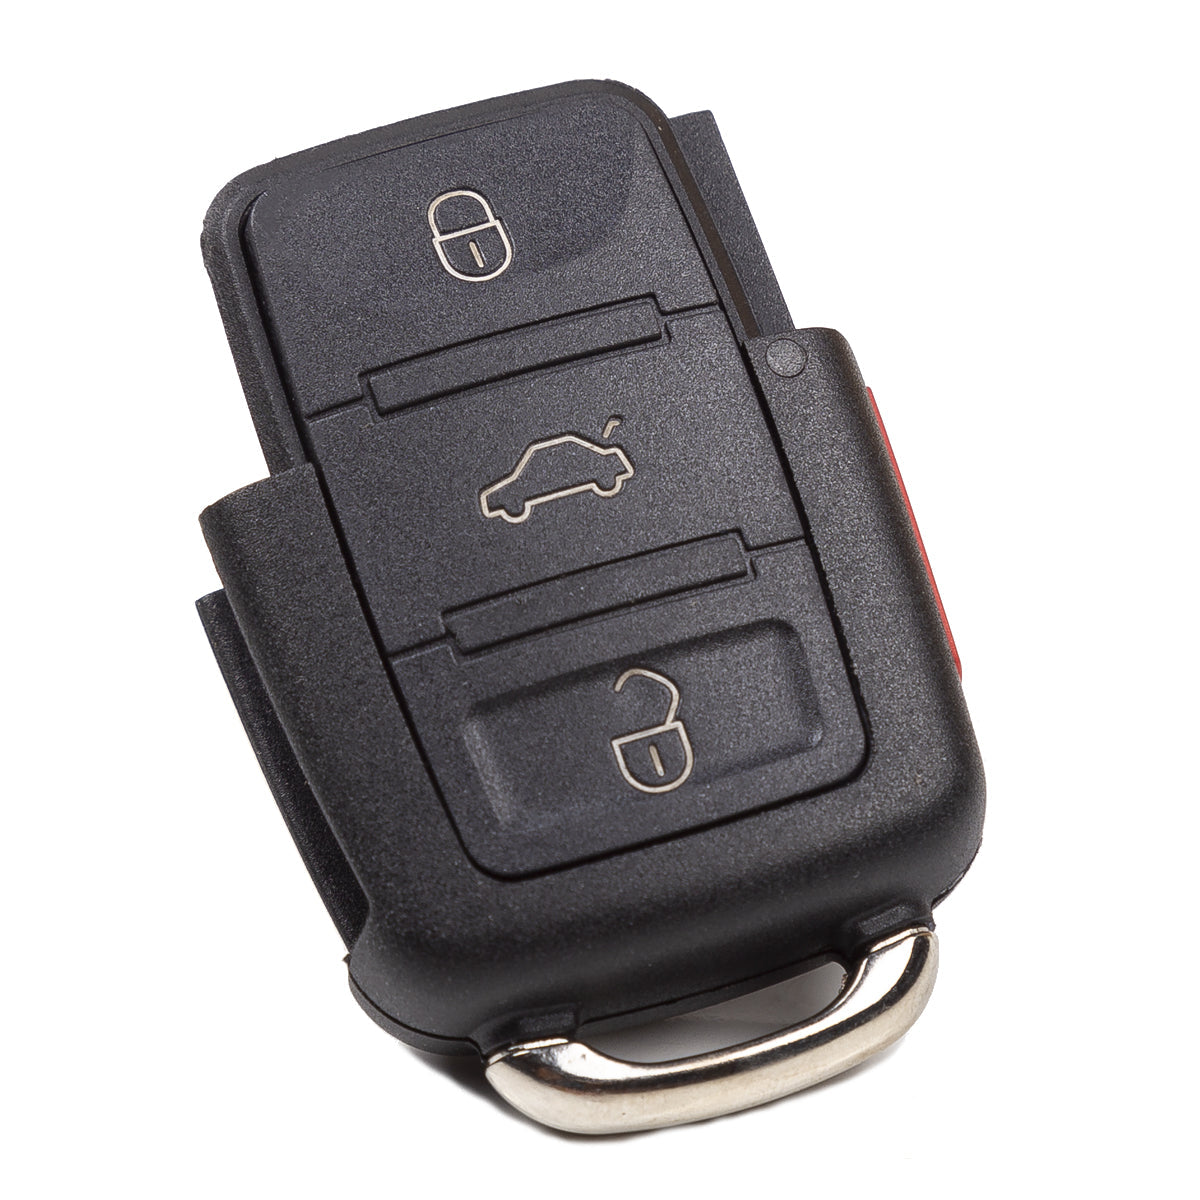 Flip Key Fob-Remote Part Compatible with Volkswagen 1998 1999 2000 2001 2002 4B Part# 1J0 959 753T